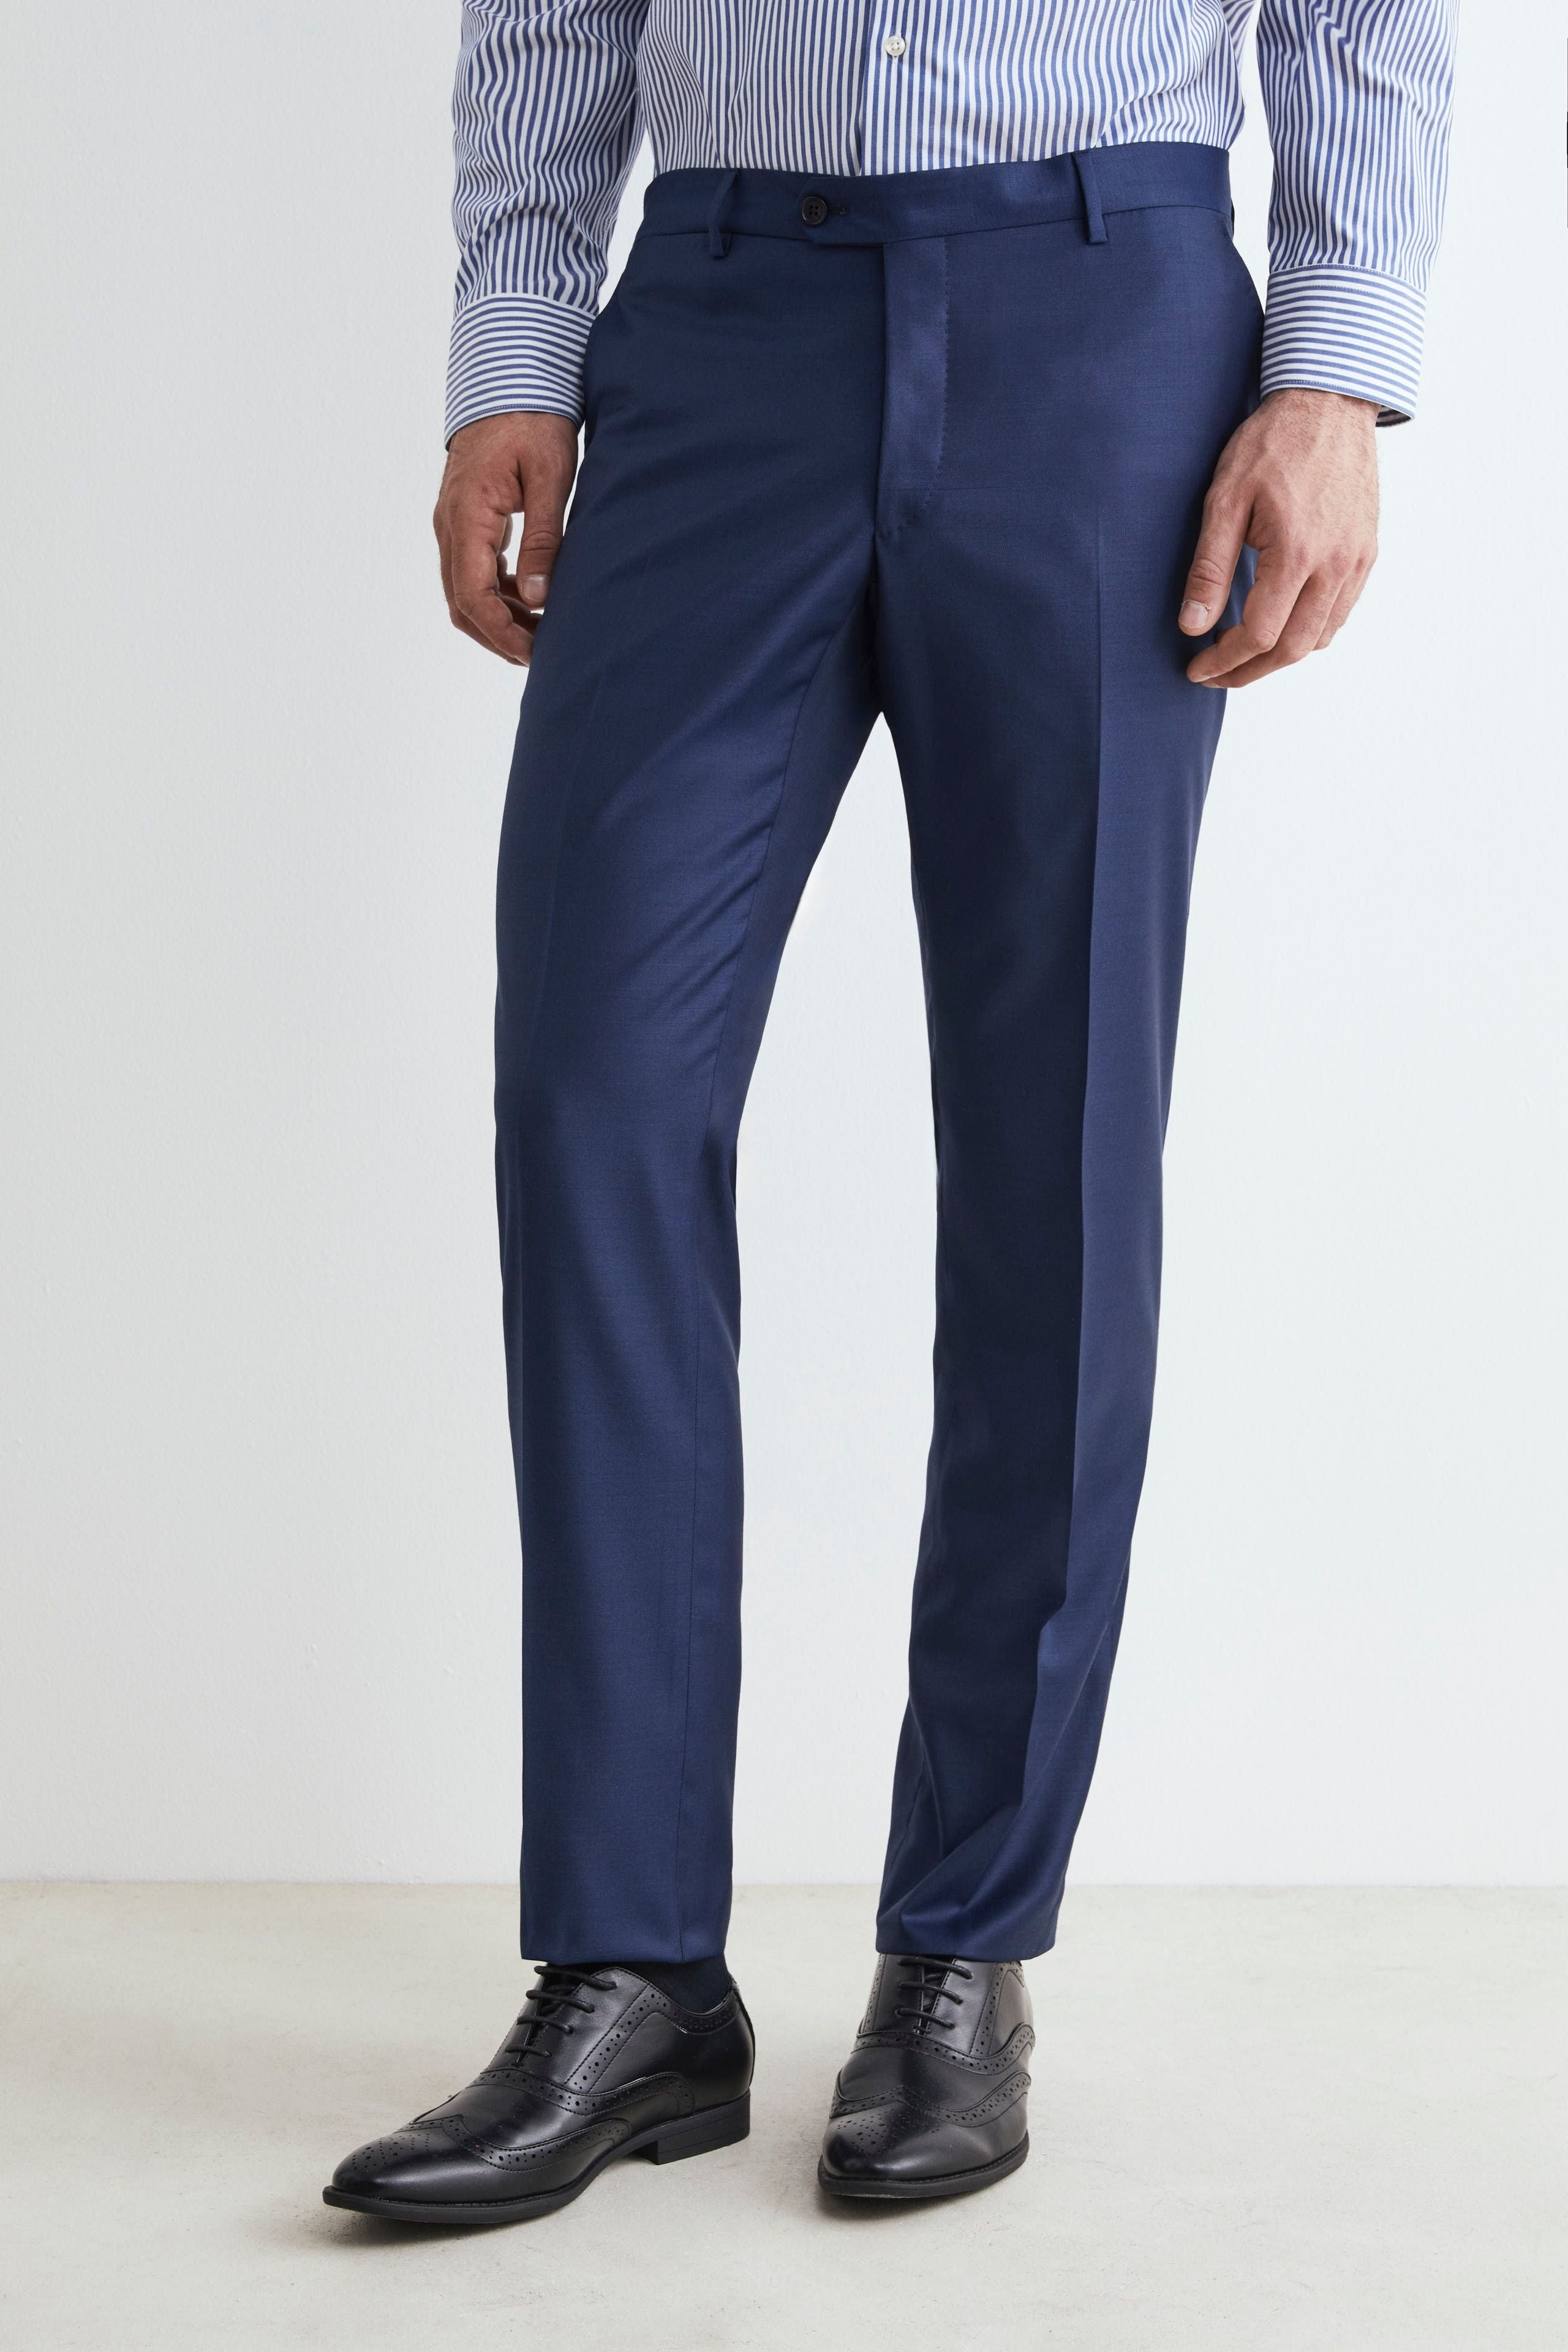 Pantalone elegante drop 6 - BLU